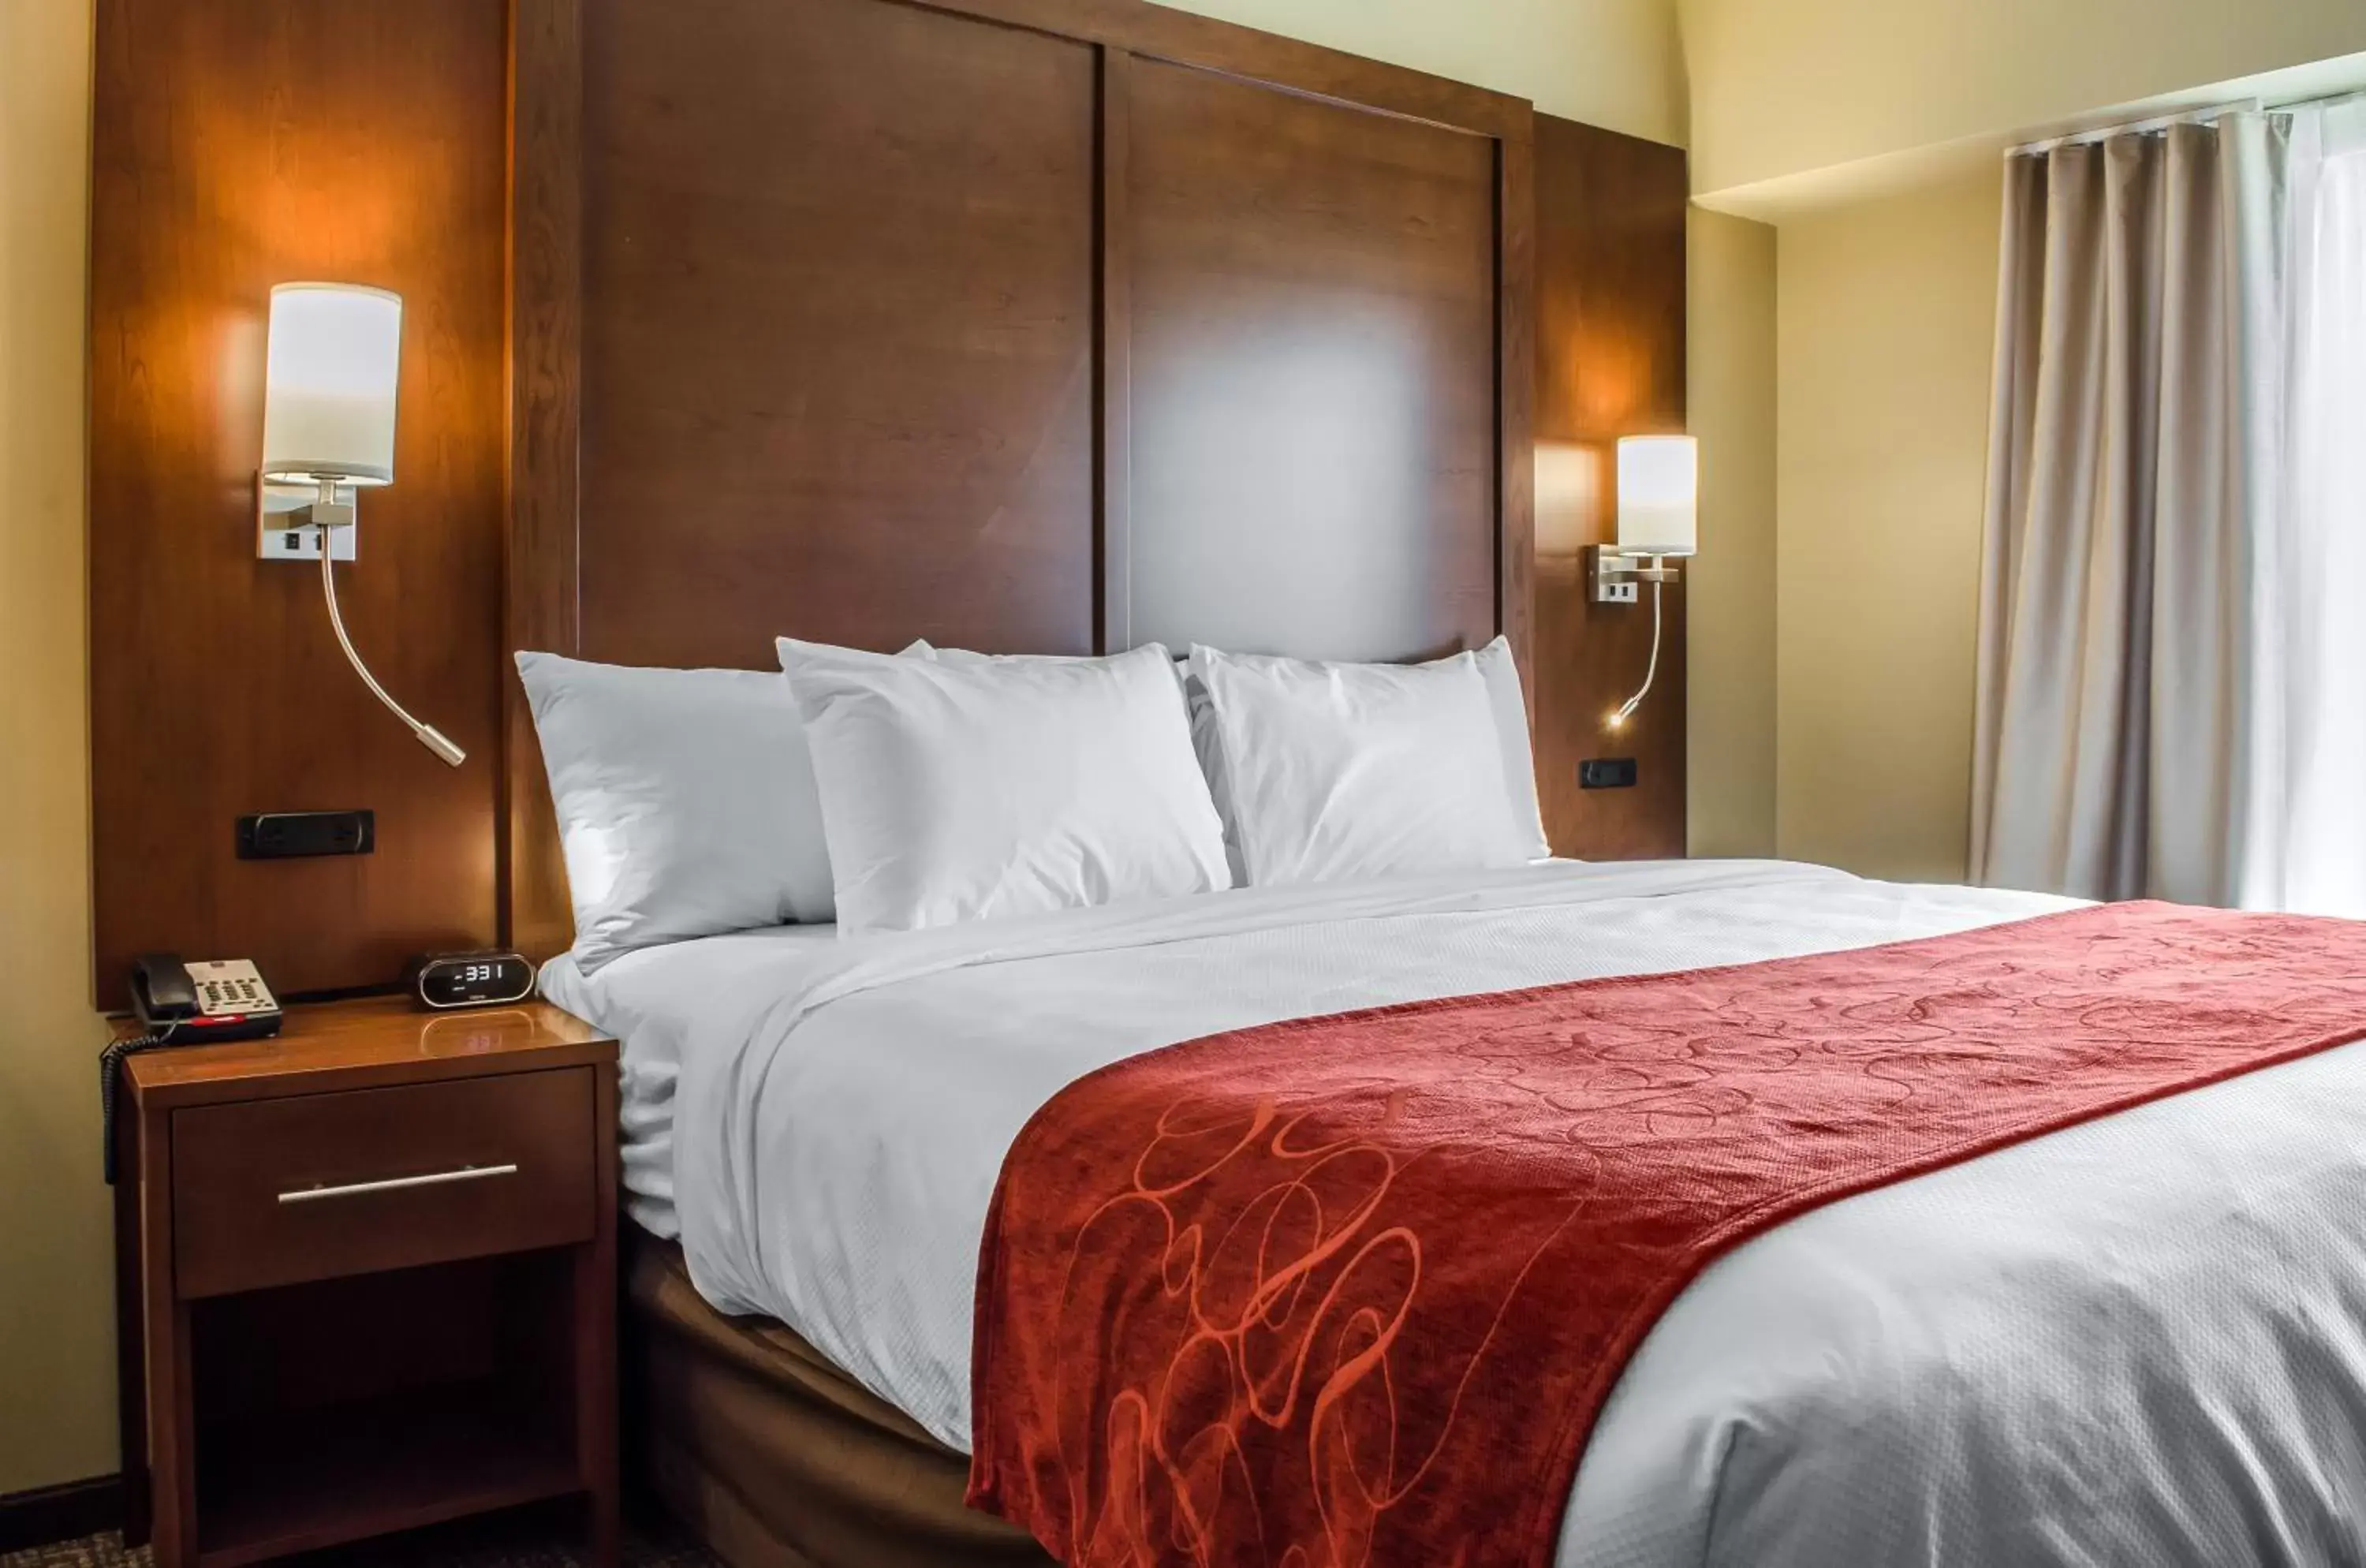 Bed, Room Photo in Comfort Suites Manheim - Lancaster